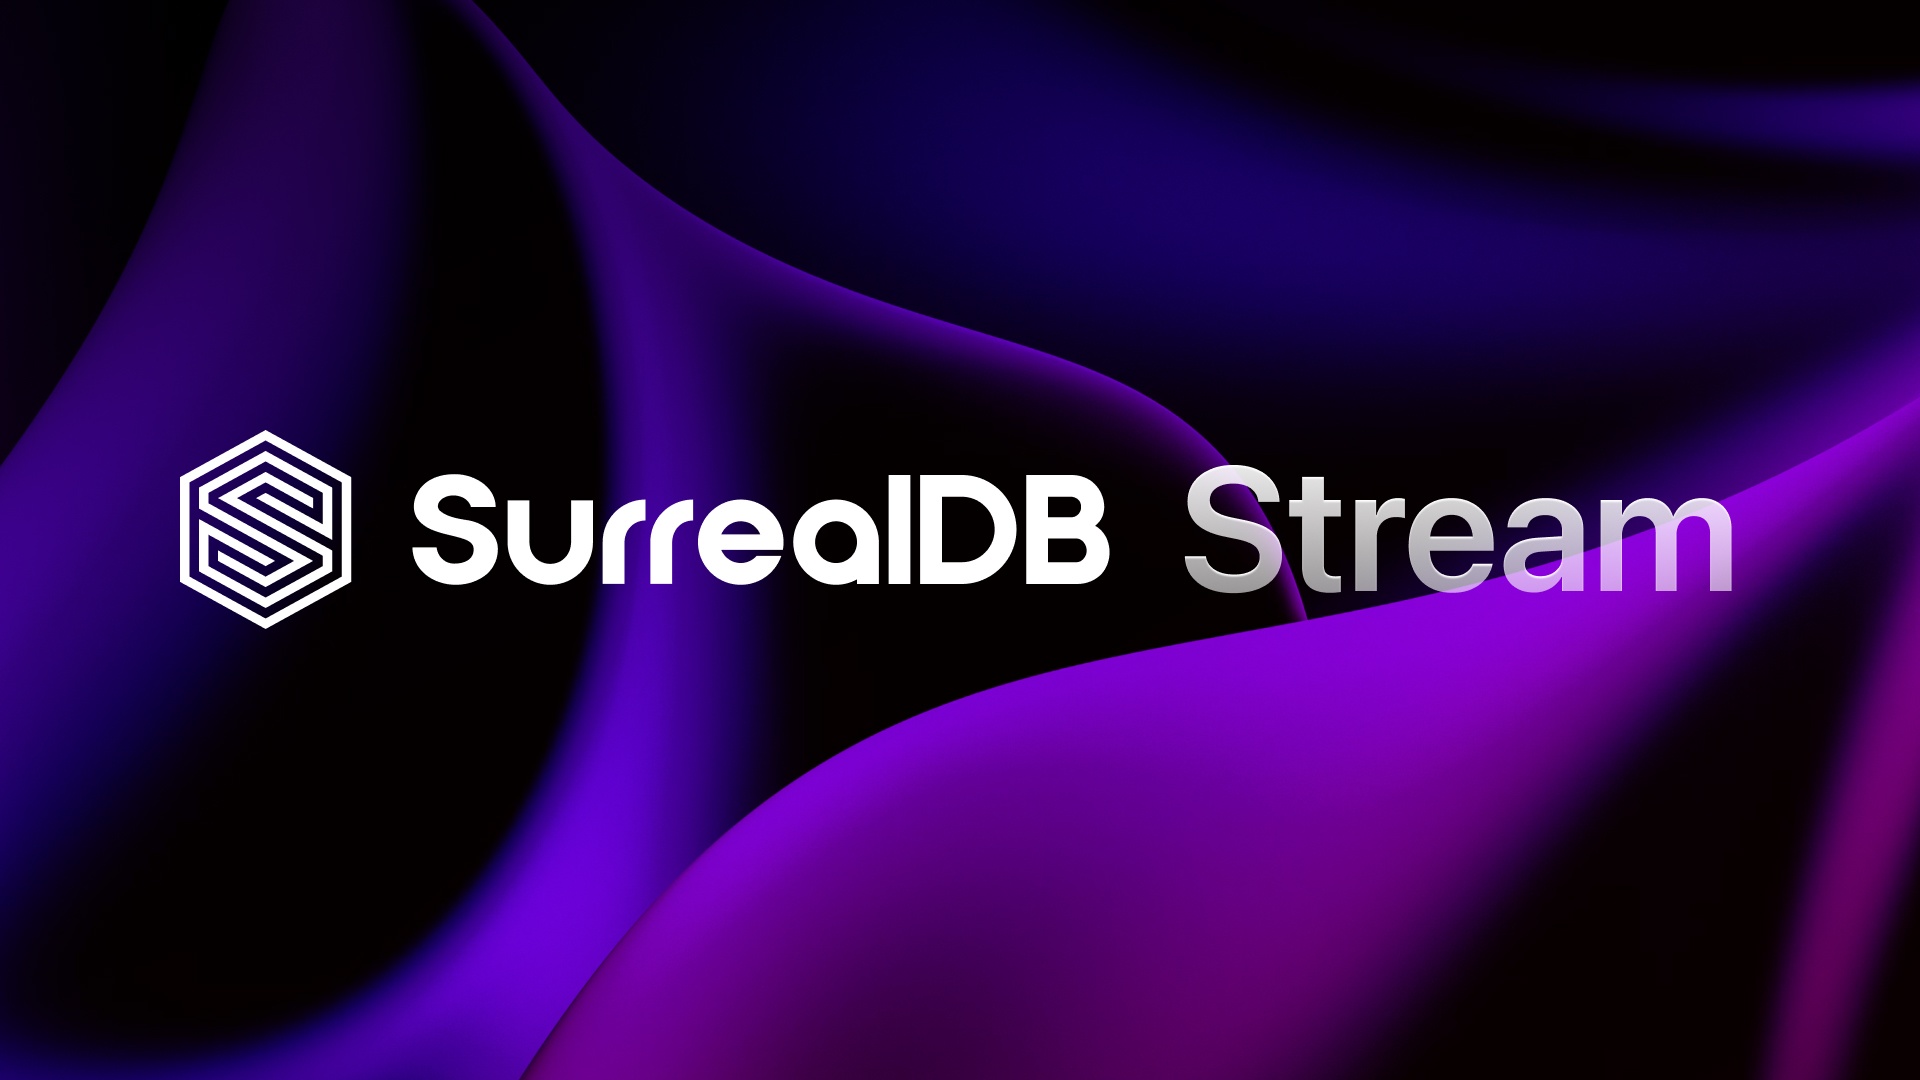 SurrealDB Stream with co-founders Tobie & Jaime Morgan Hitchcock